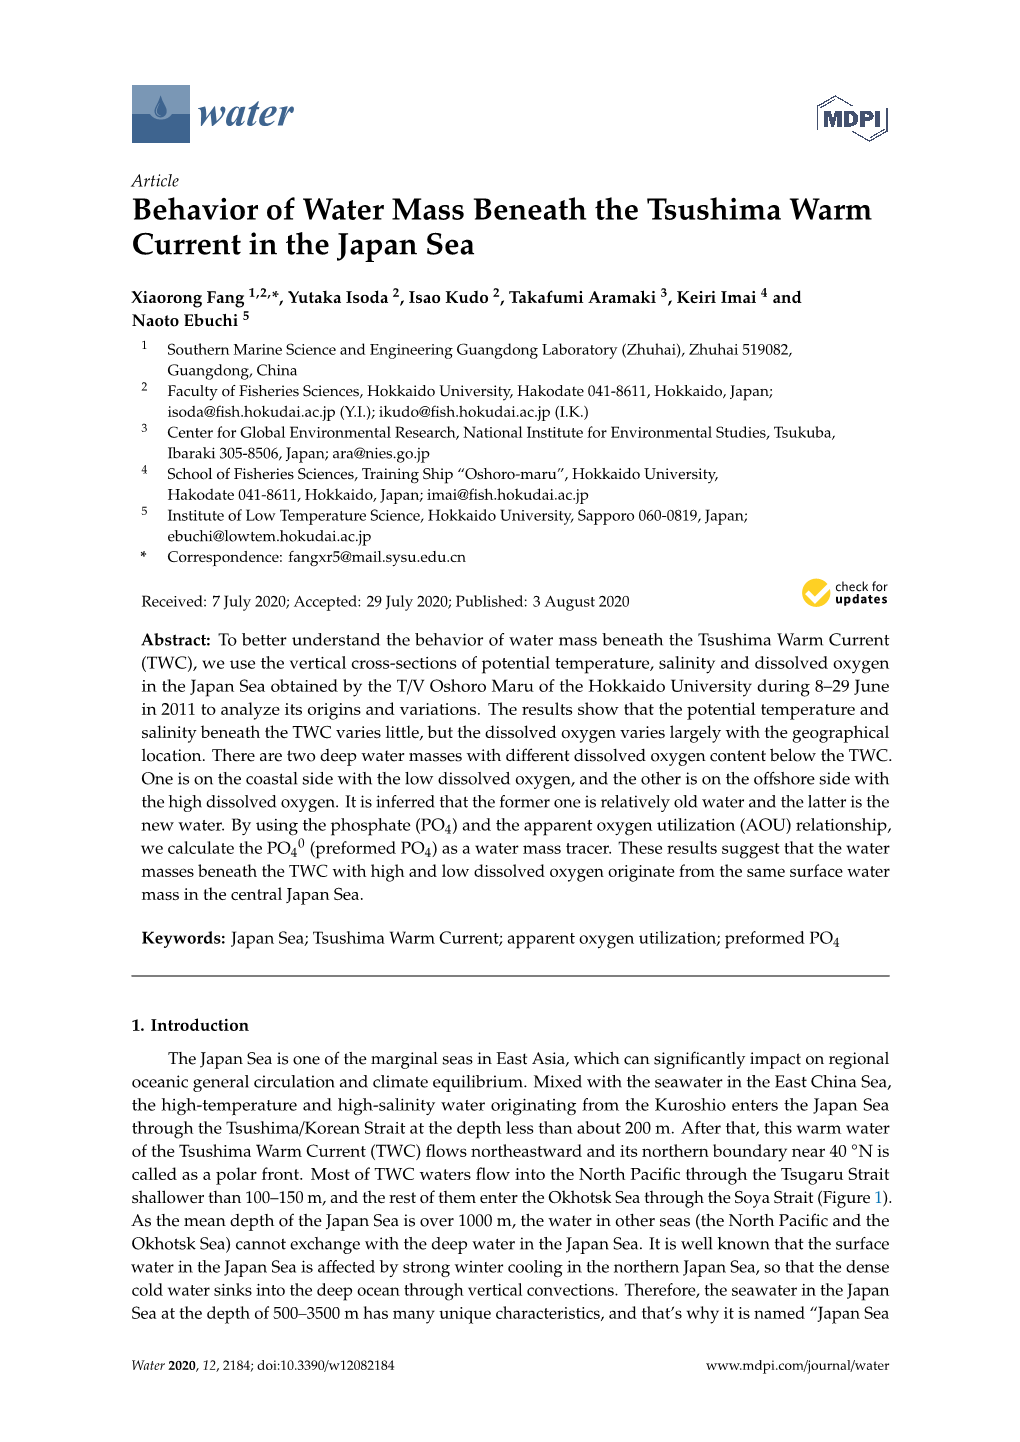 Behavior of Water Mass Beneath the Tsushima Warm Current in the Japan Sea